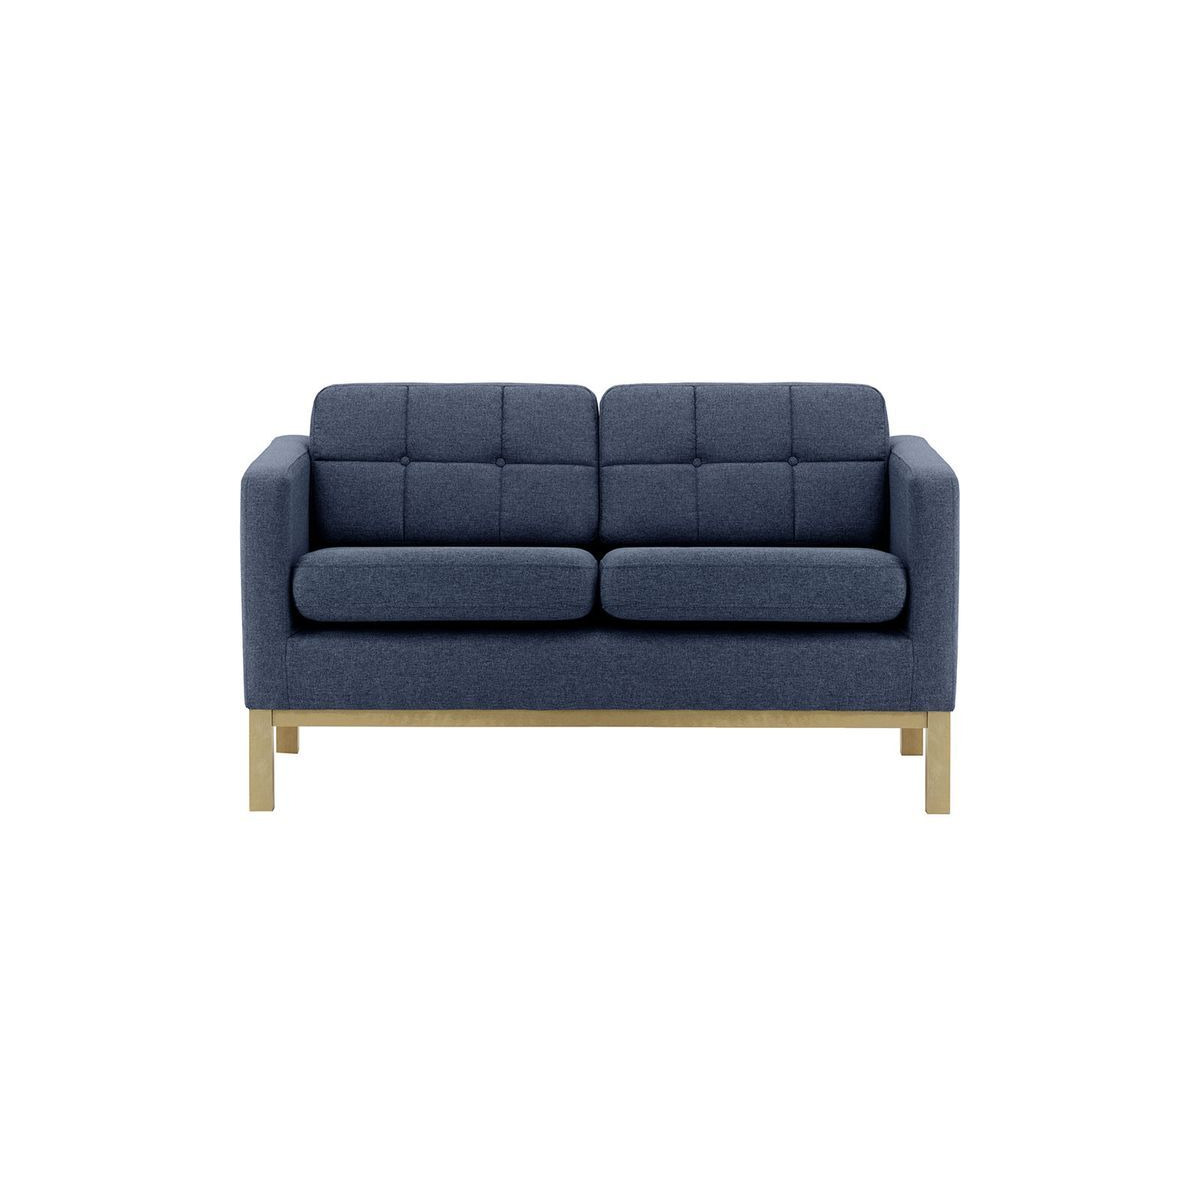 Normann 2 Seater Sofa, navy blue, Leg colour: wax black - image 1